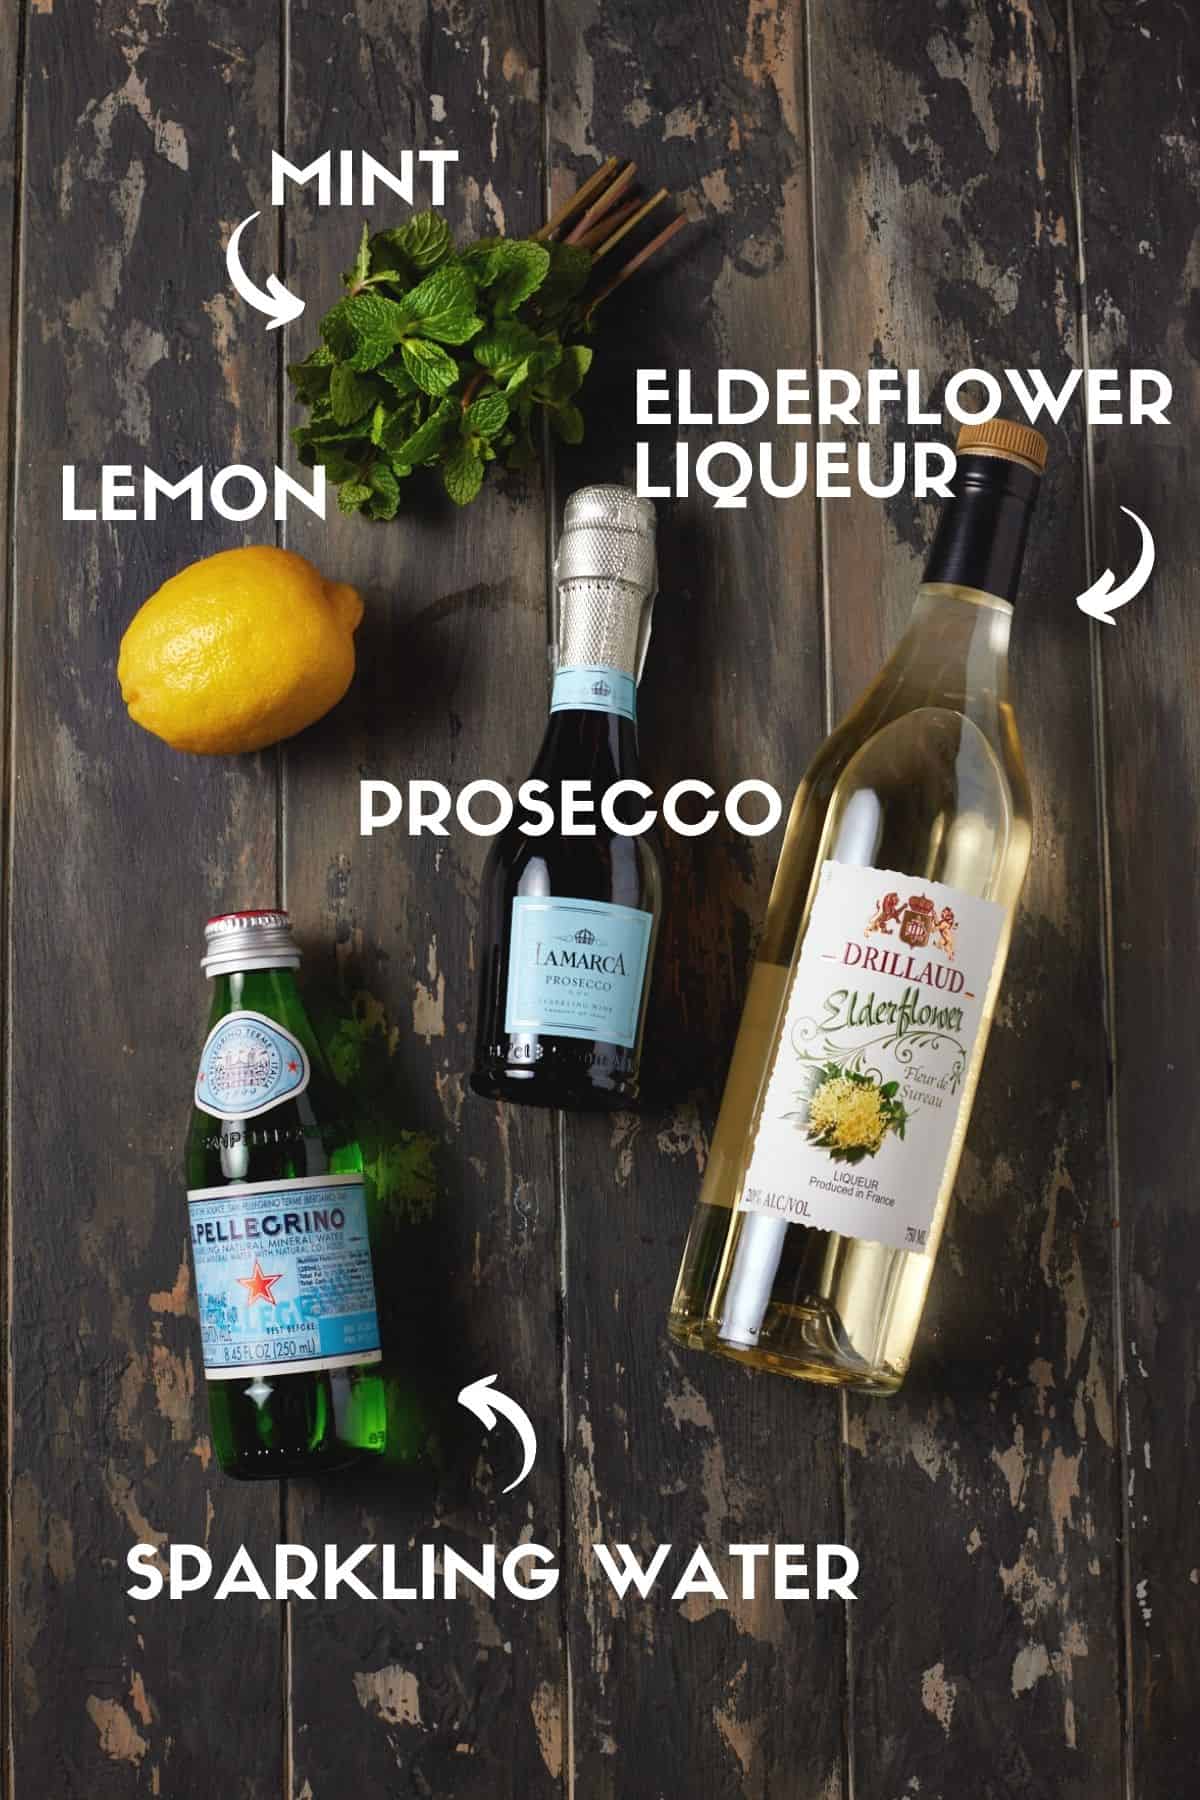 Bottles of prosecco, sparkling water, elderflower liqueur, a lemon and mint leaves on a wood board. 